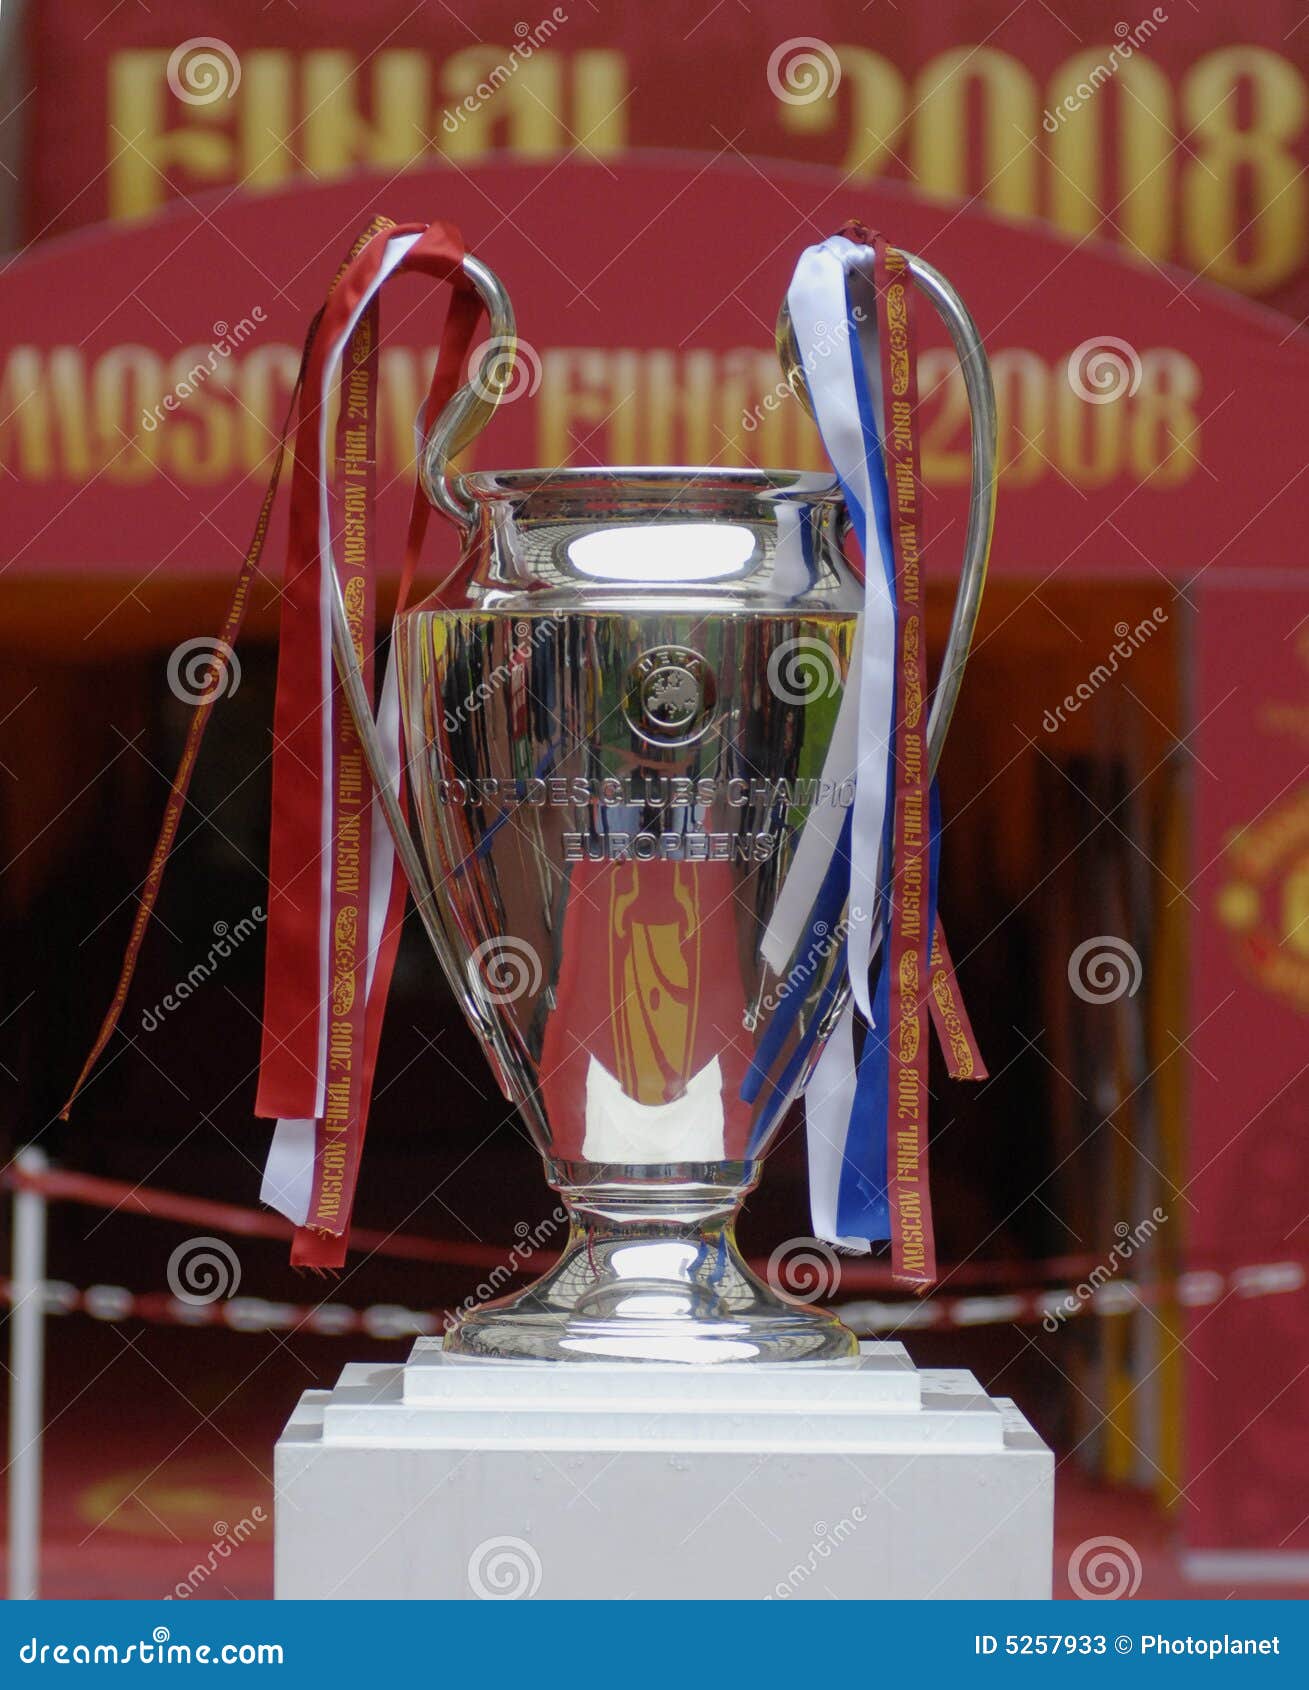 UEFA League Final 2008 Editorial Stock Photo - Image of moscow, league: 5257933